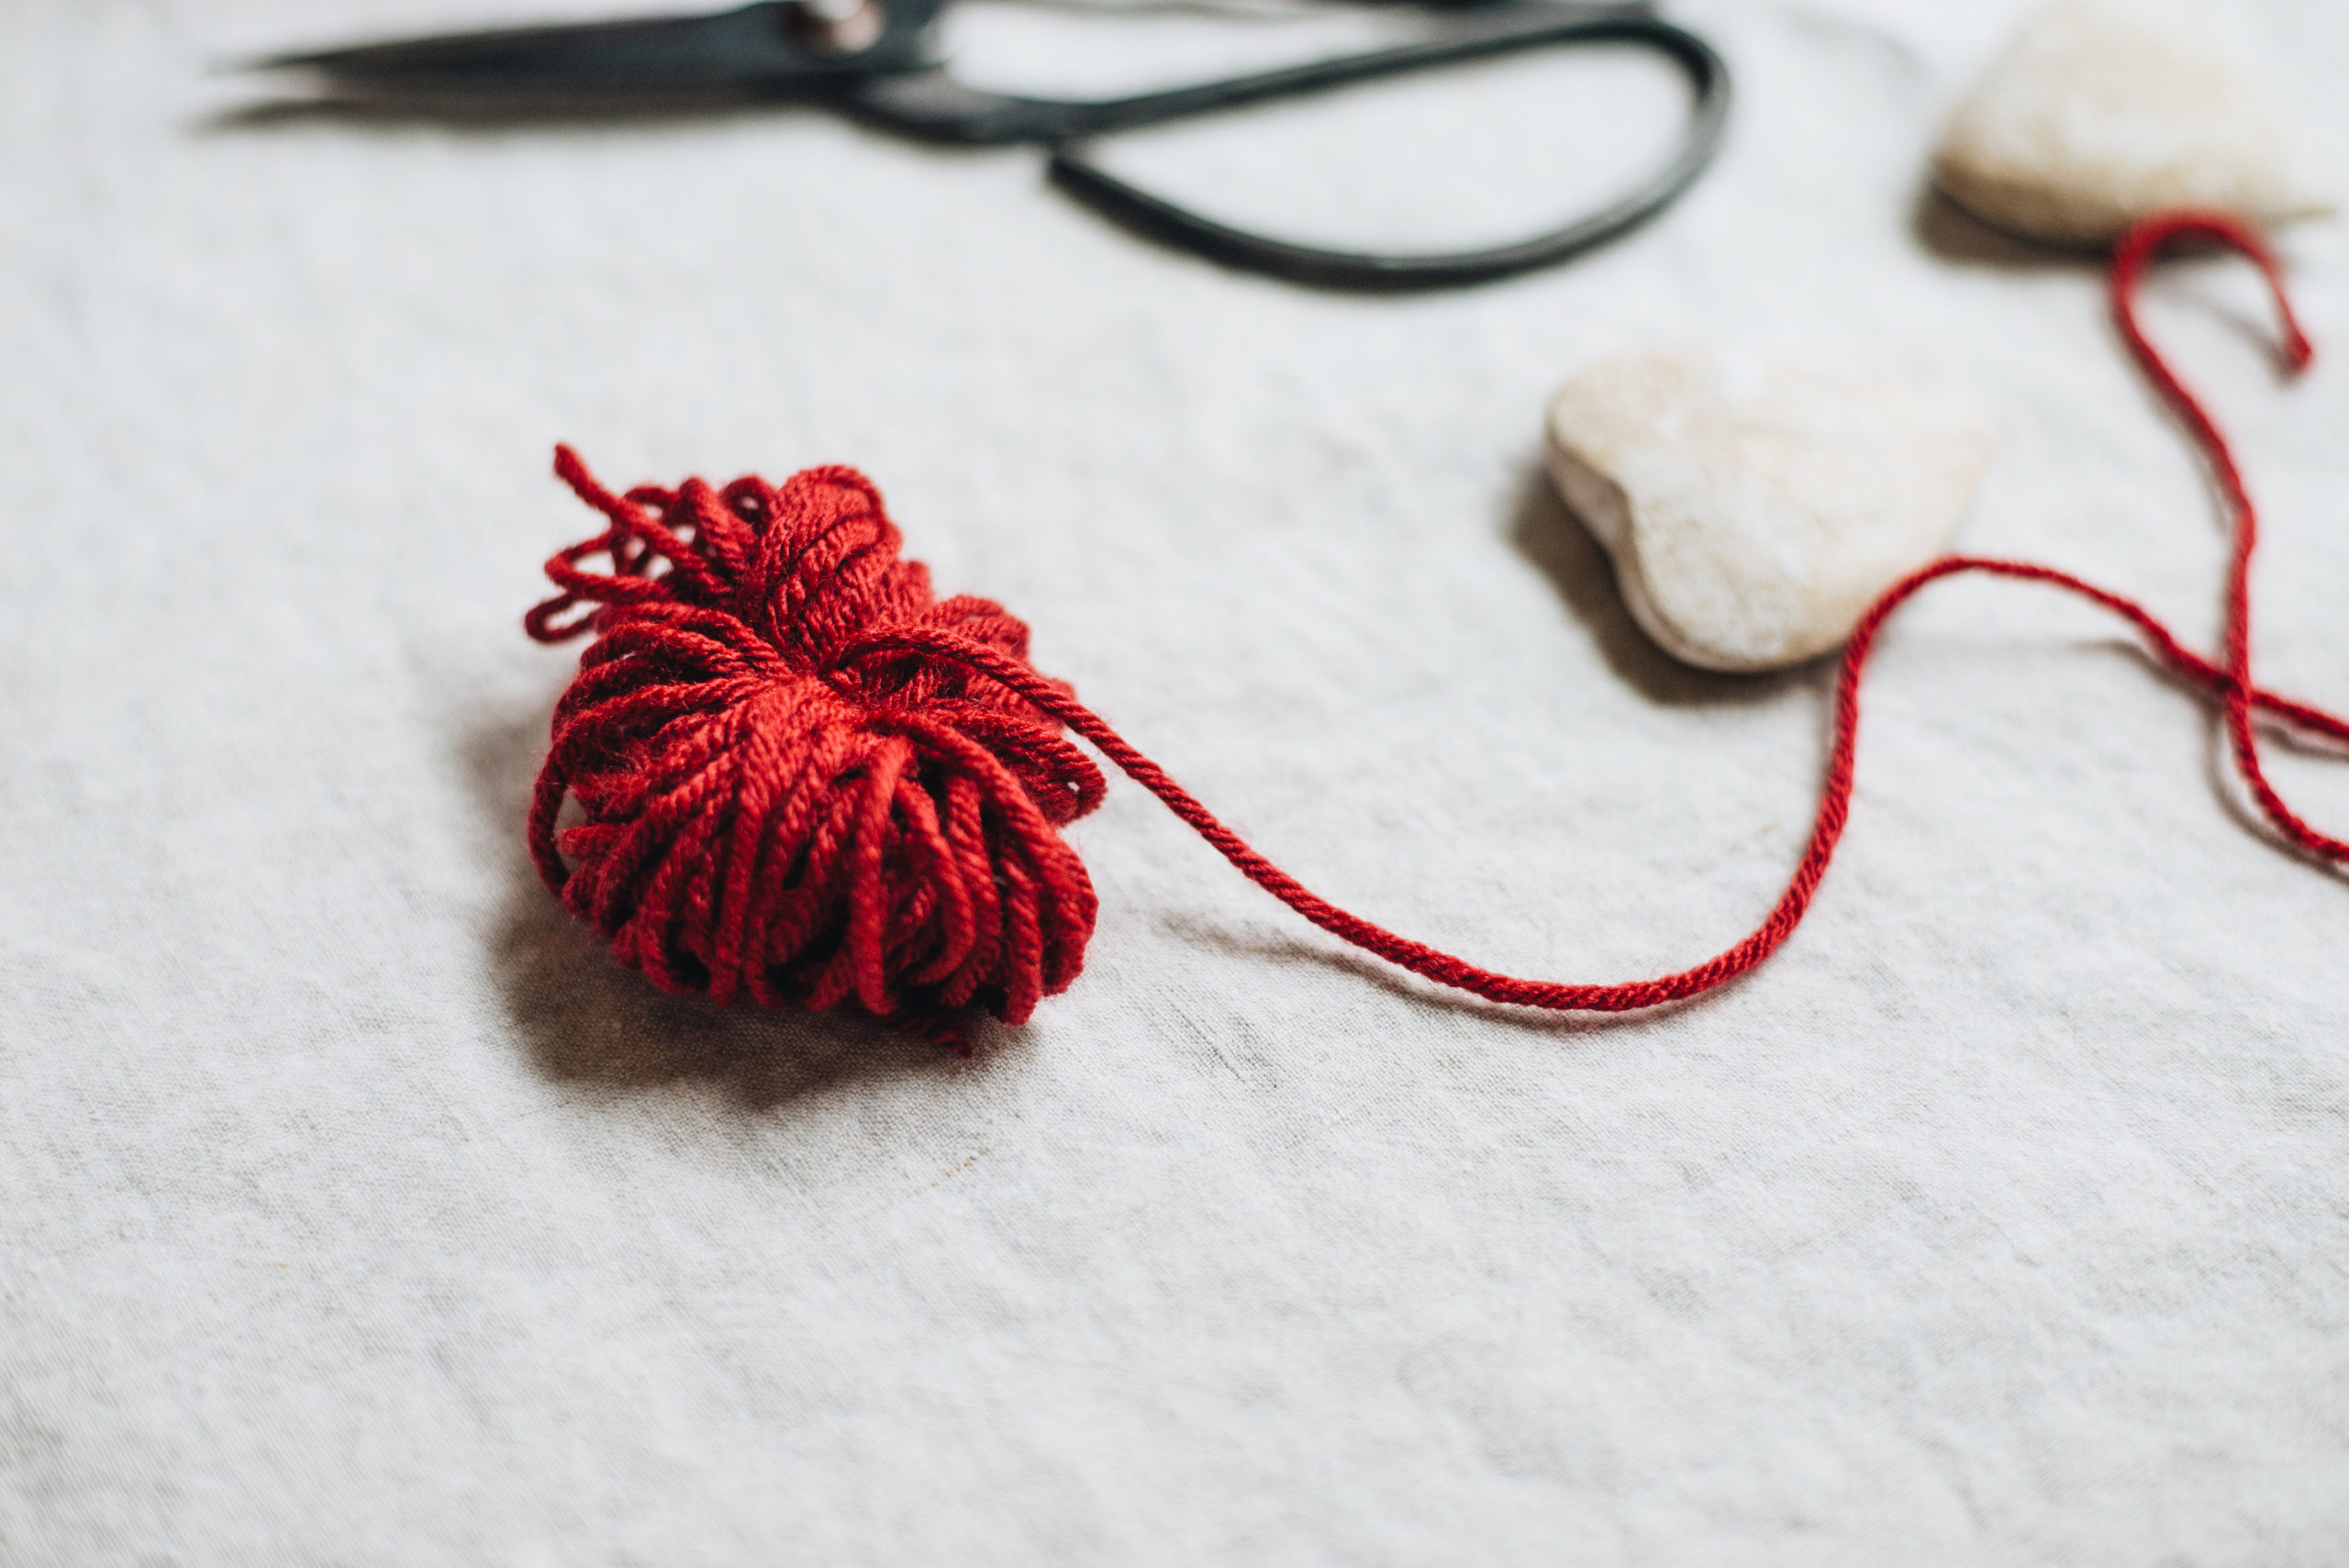 tie loop of yarn and snip with scissors